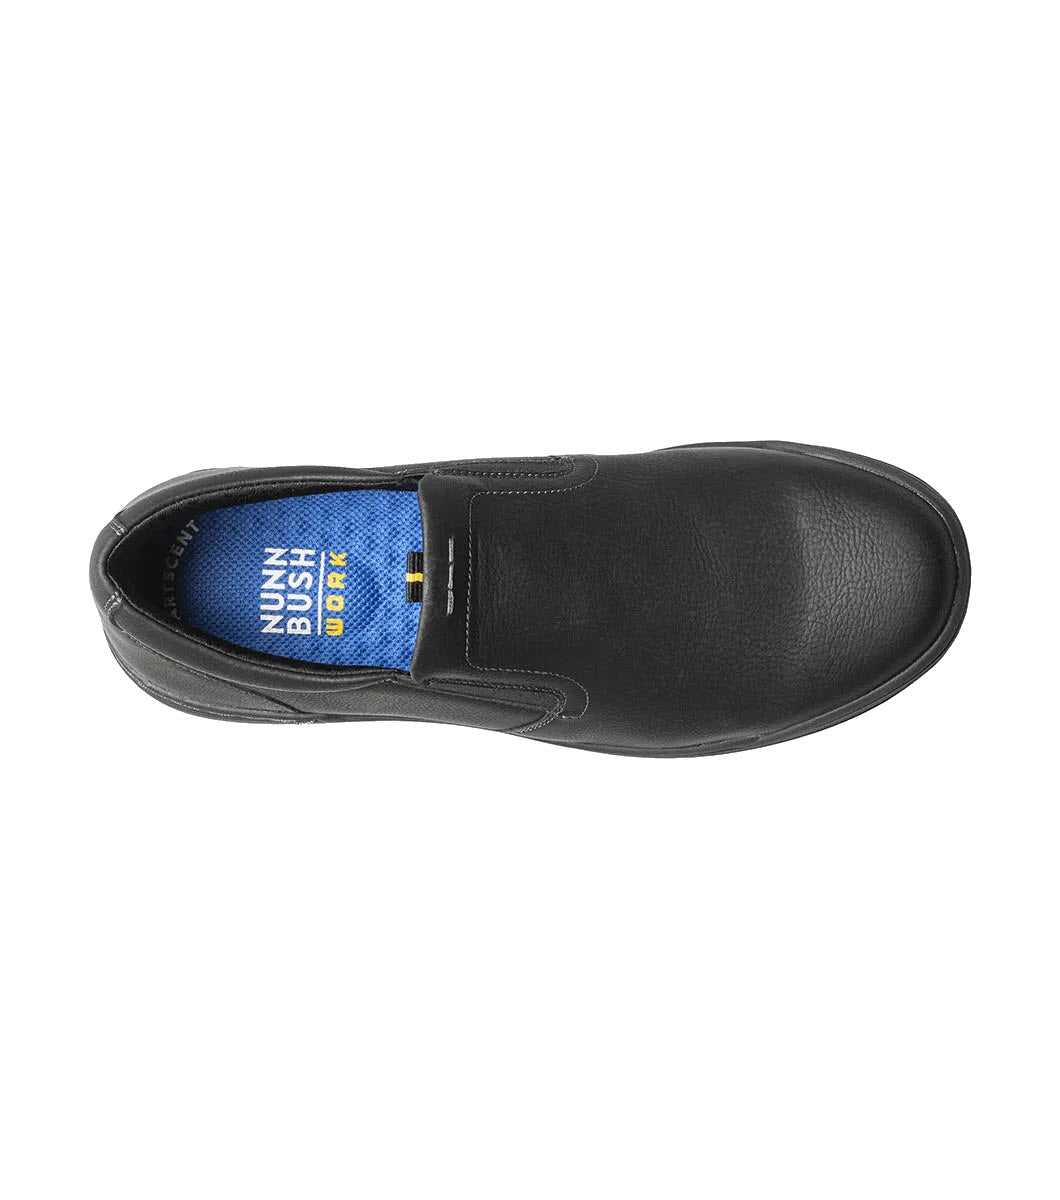 Top view of a single black Nunn Bush Tour Work Plain Toe slip-on shoe with a blue interior lining.